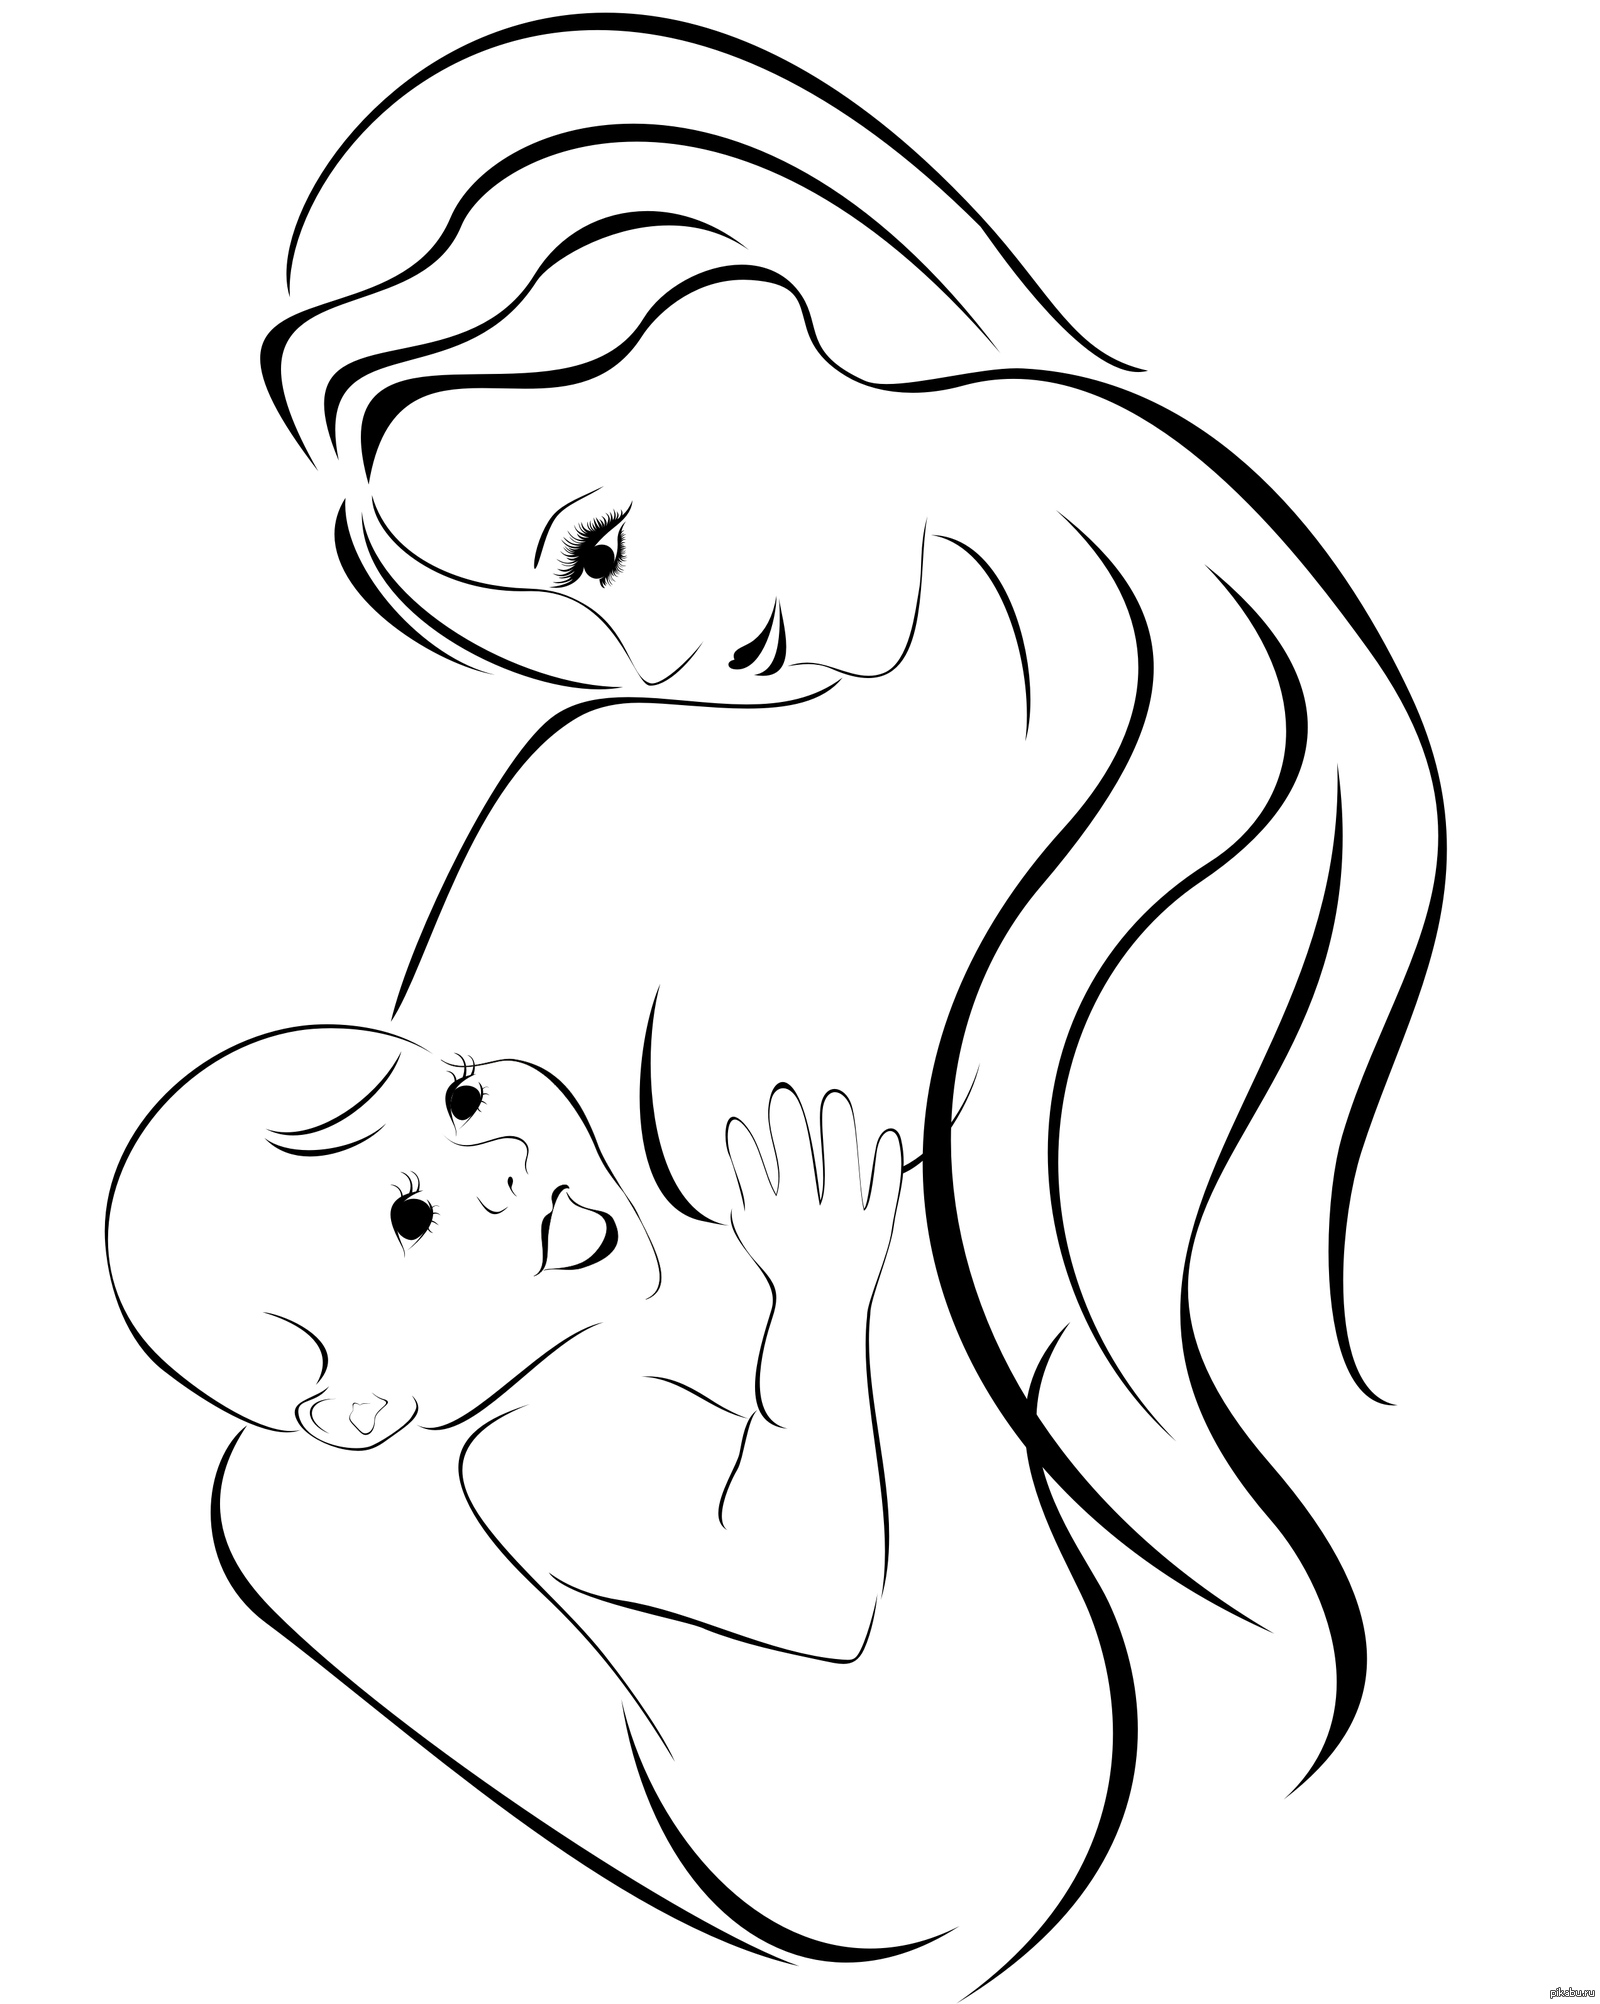 Мама с ребенком 4 класс. Рисунок ко Дню матери. Рисунок на тему материнство. Рисунок на день матери карандашом. Рисунок на день матери для срисовки.